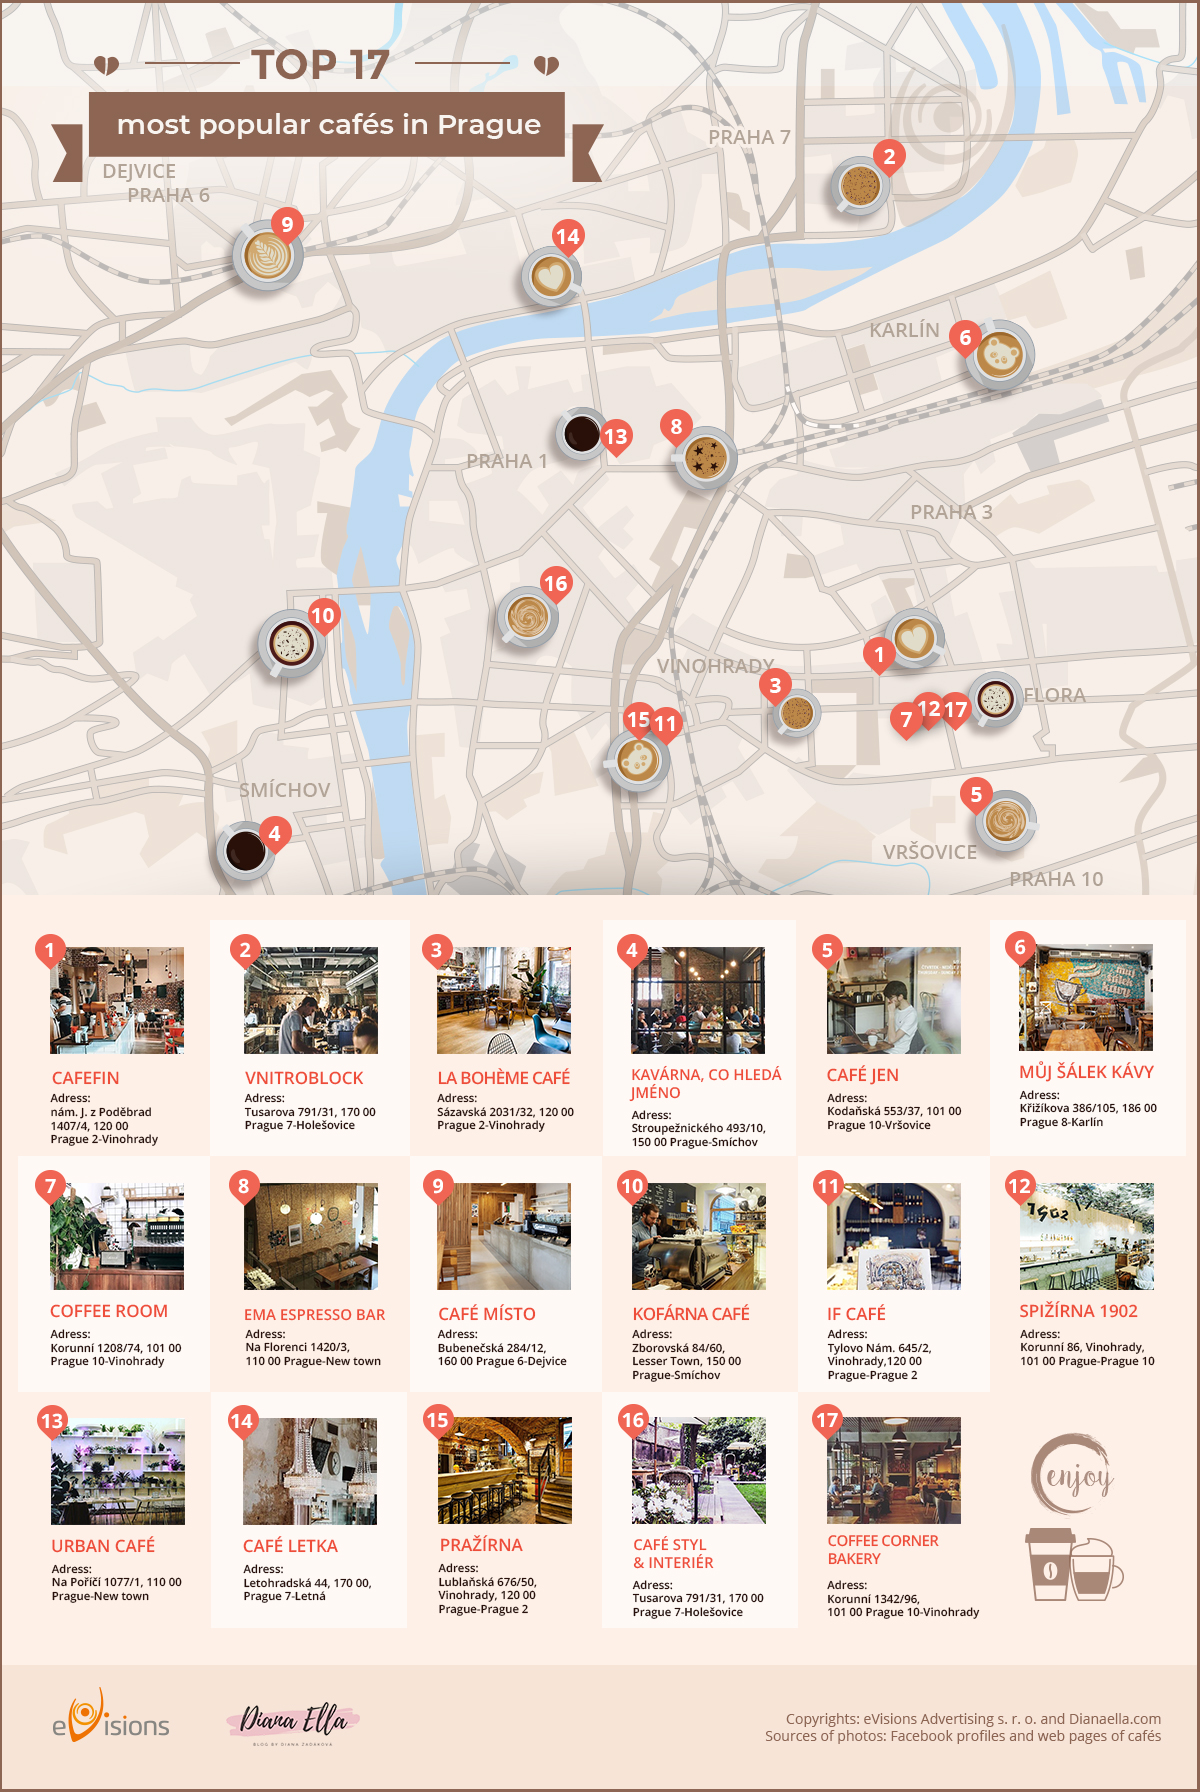 The most popular cafés in Prague